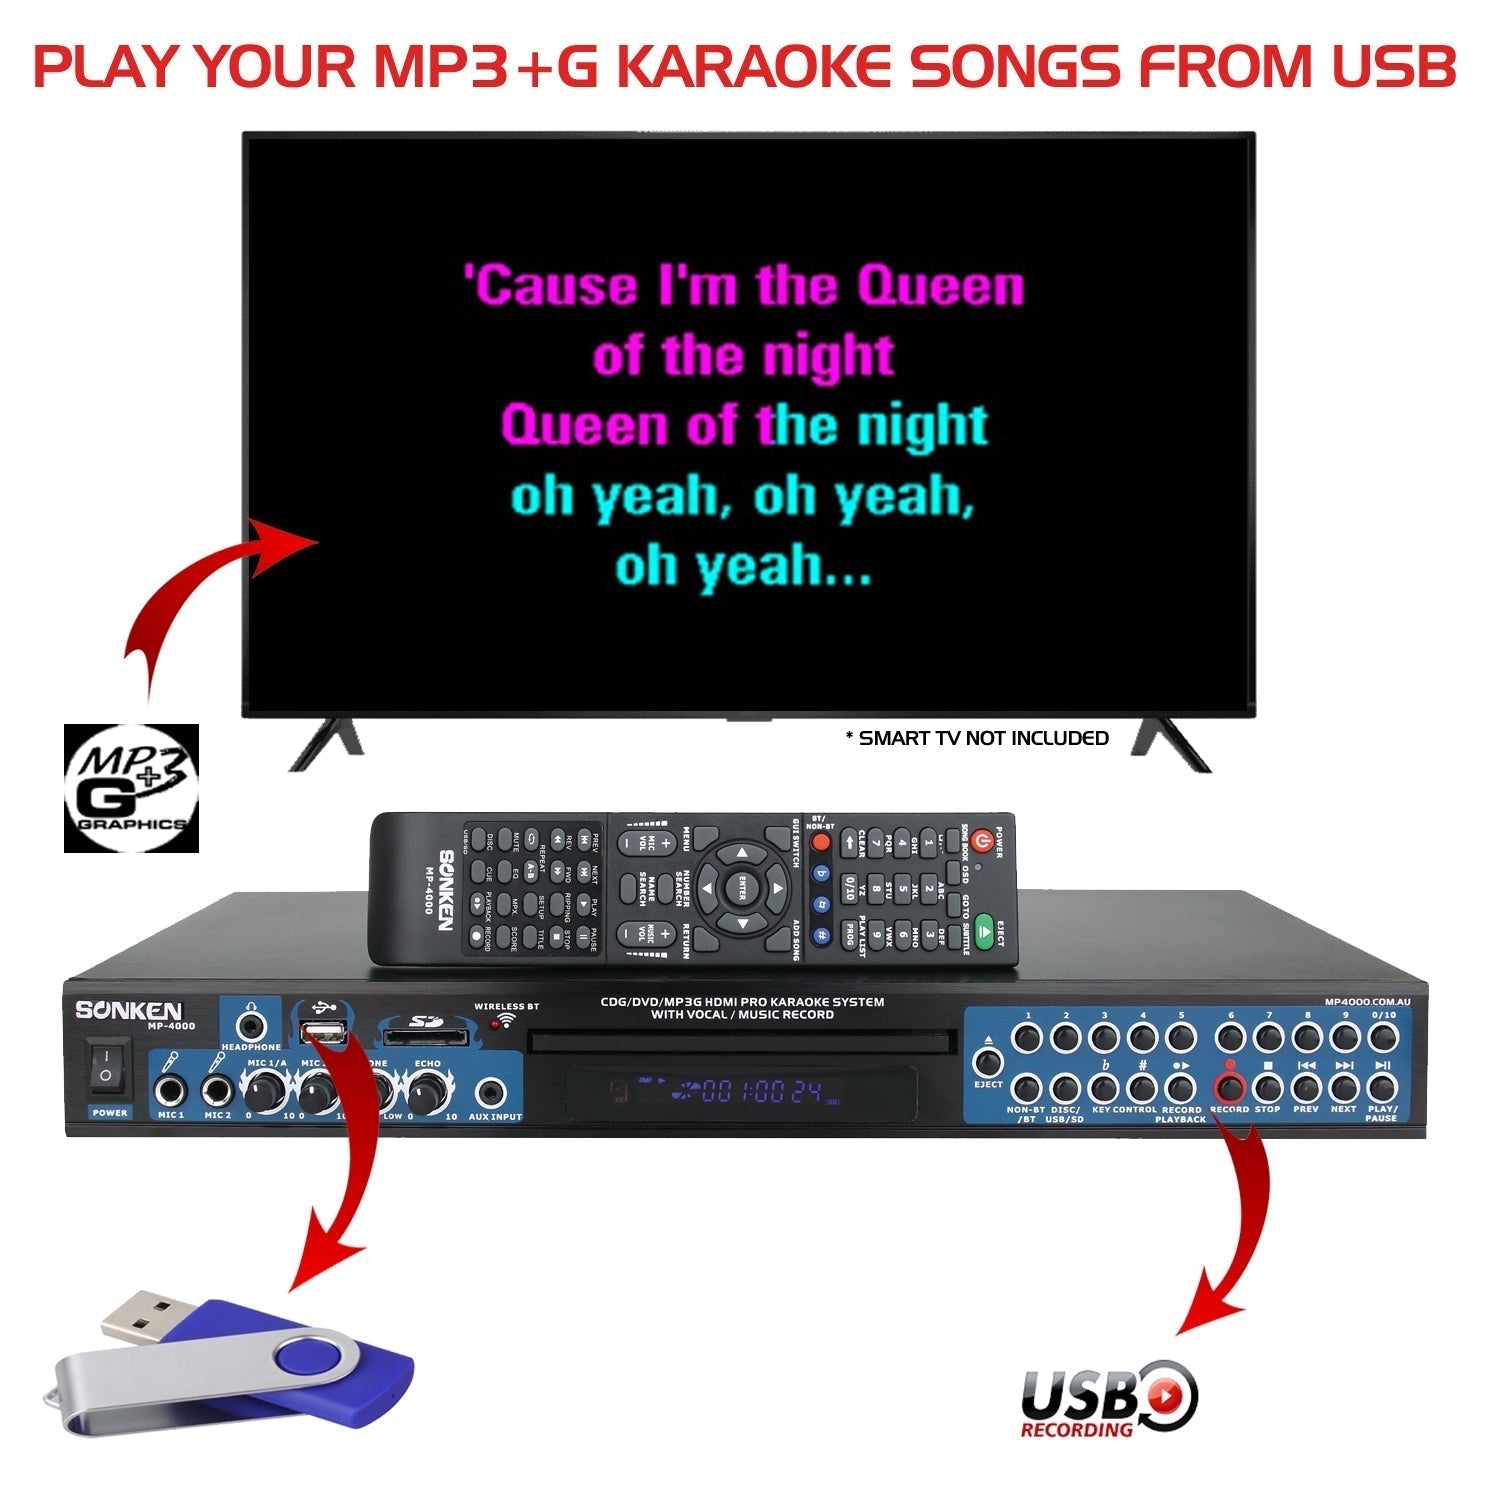 Sonken MP4000 Pro Karaoke Machine + 435 Songs from the 60's & 70's + 2 Wired Microphones - Karaoke Home Entertainment